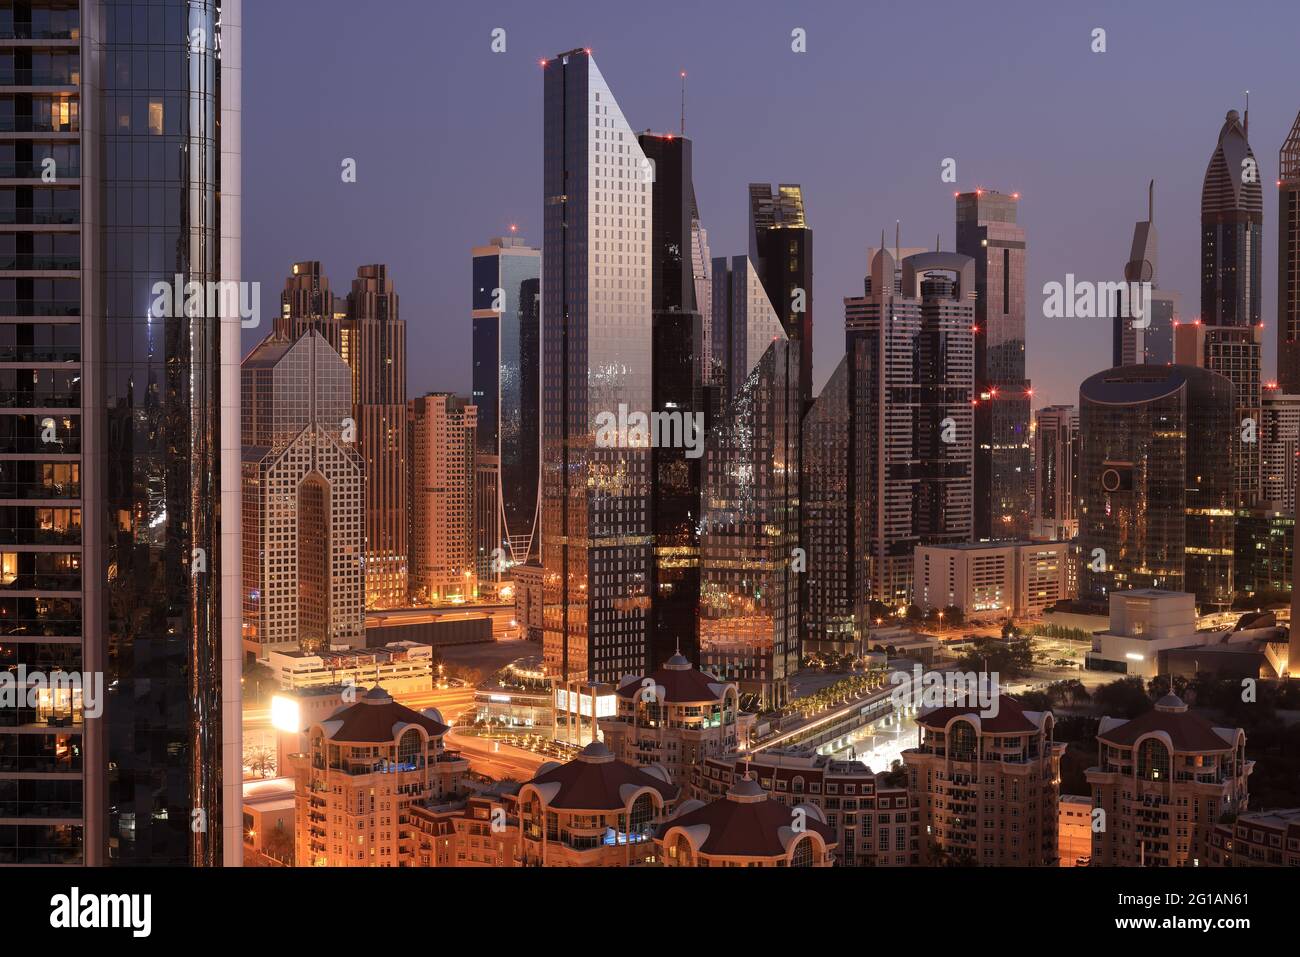 Dubai, UAE Stock Photo